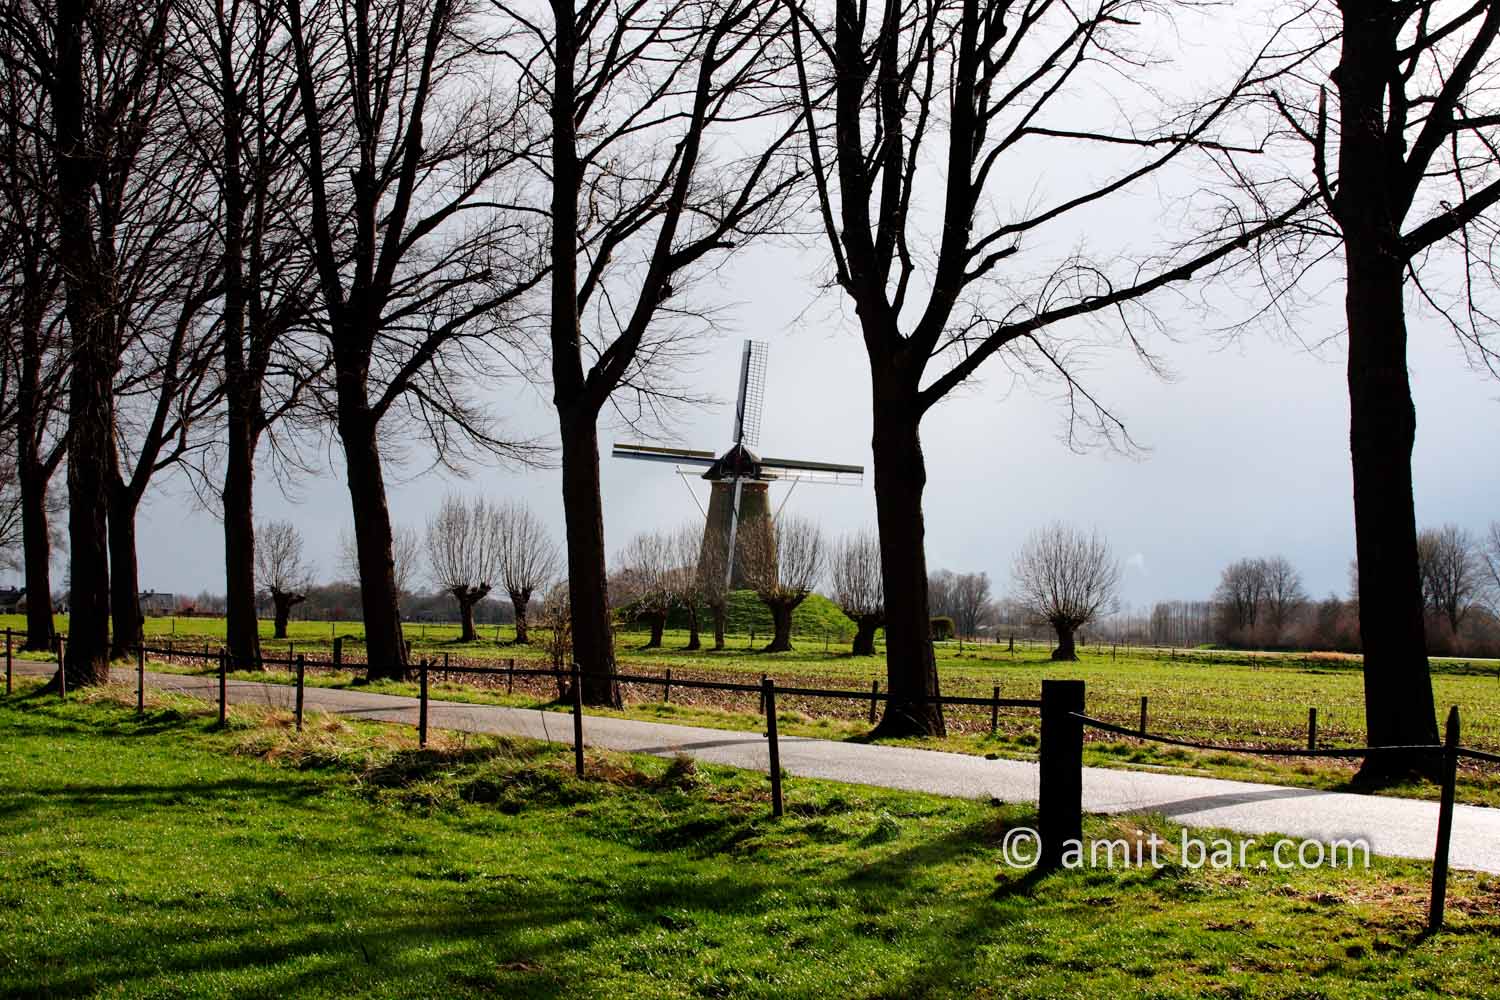 The windmill at Bronckhorst: The windmill at Bronckhorst